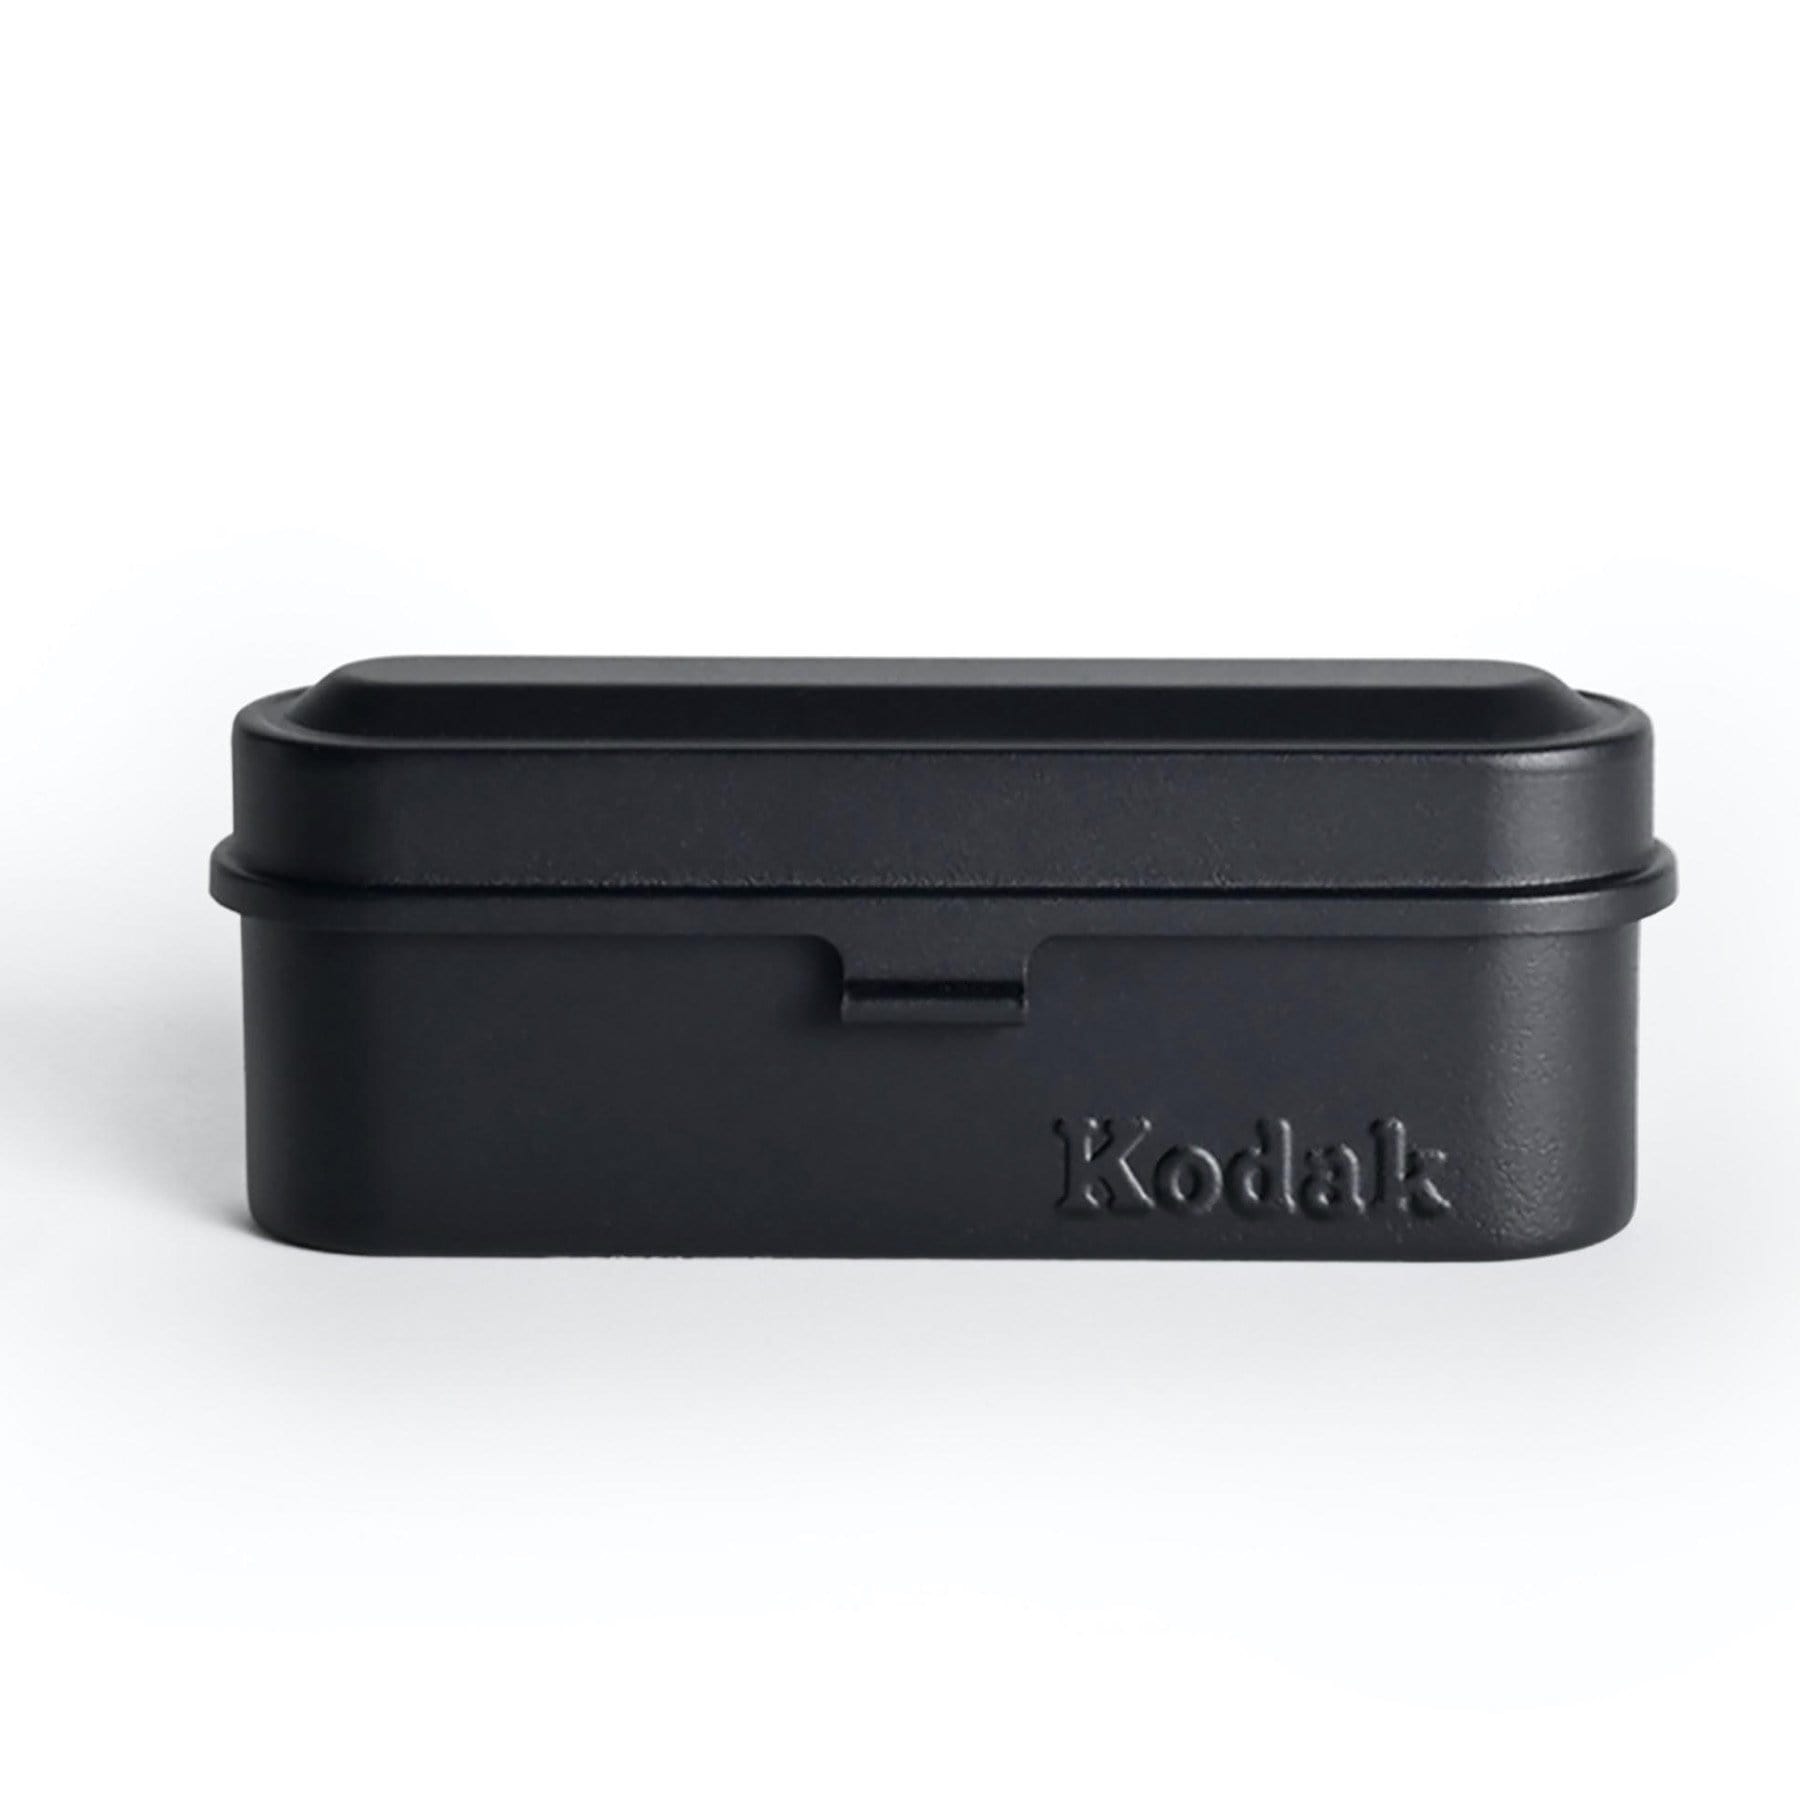 Kodak Metal Film Cases for 35mm